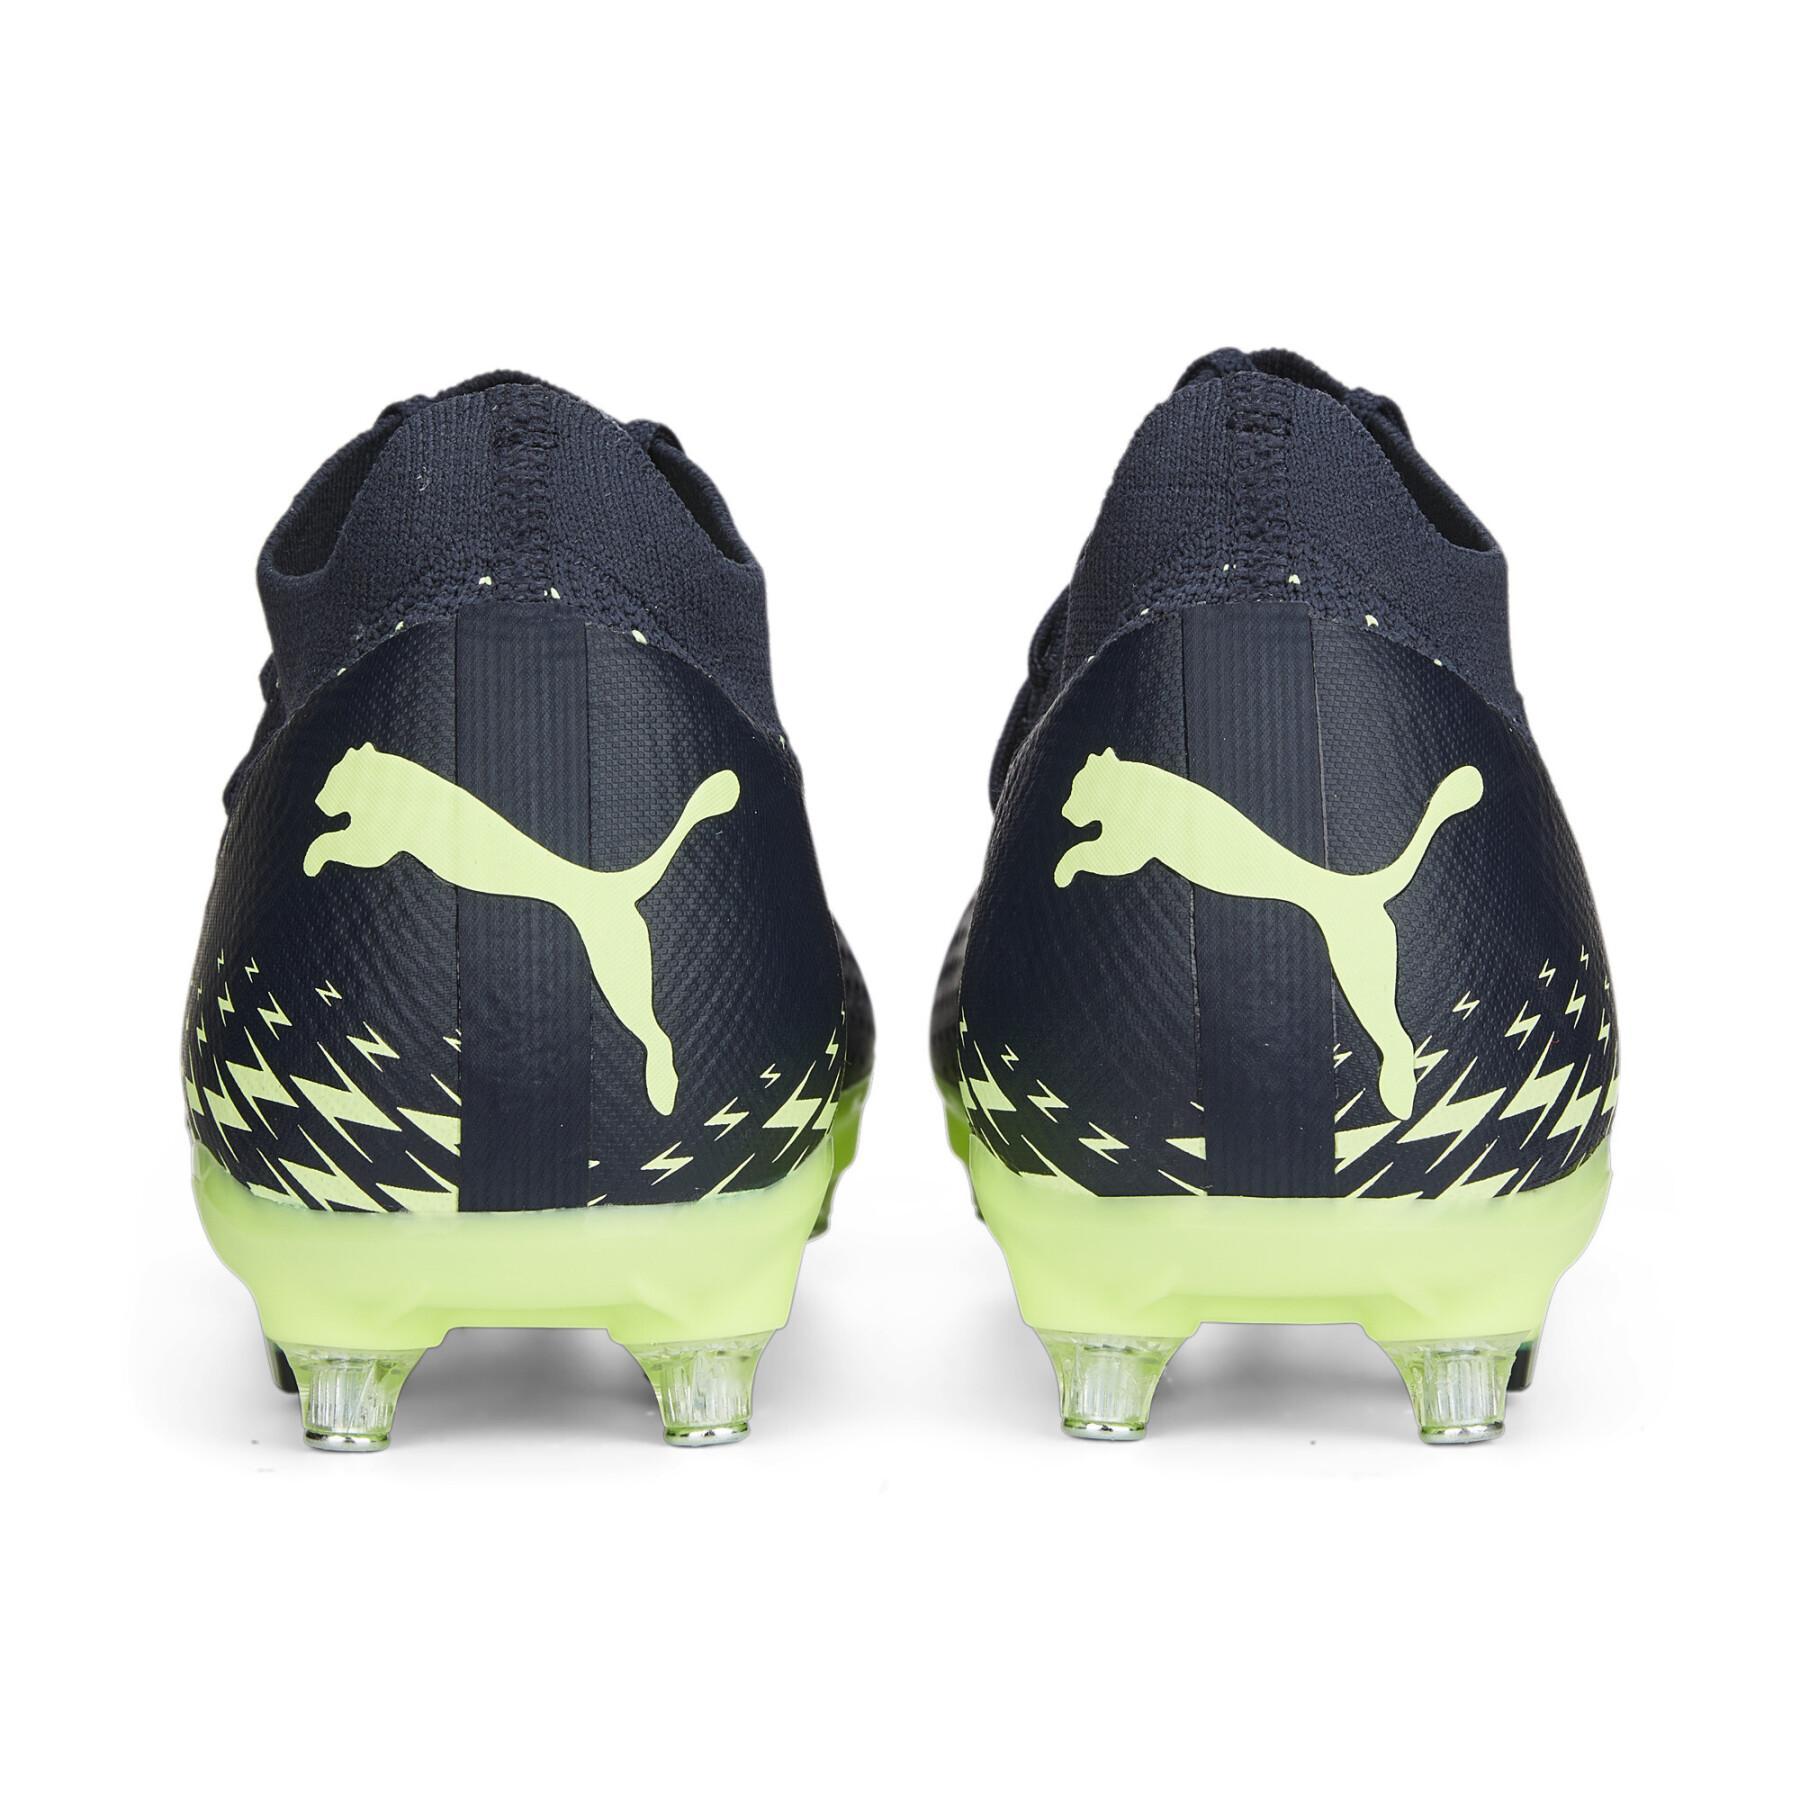 Soccer shoes Puma Future Z 3.4 MxSG - Fastest Pack